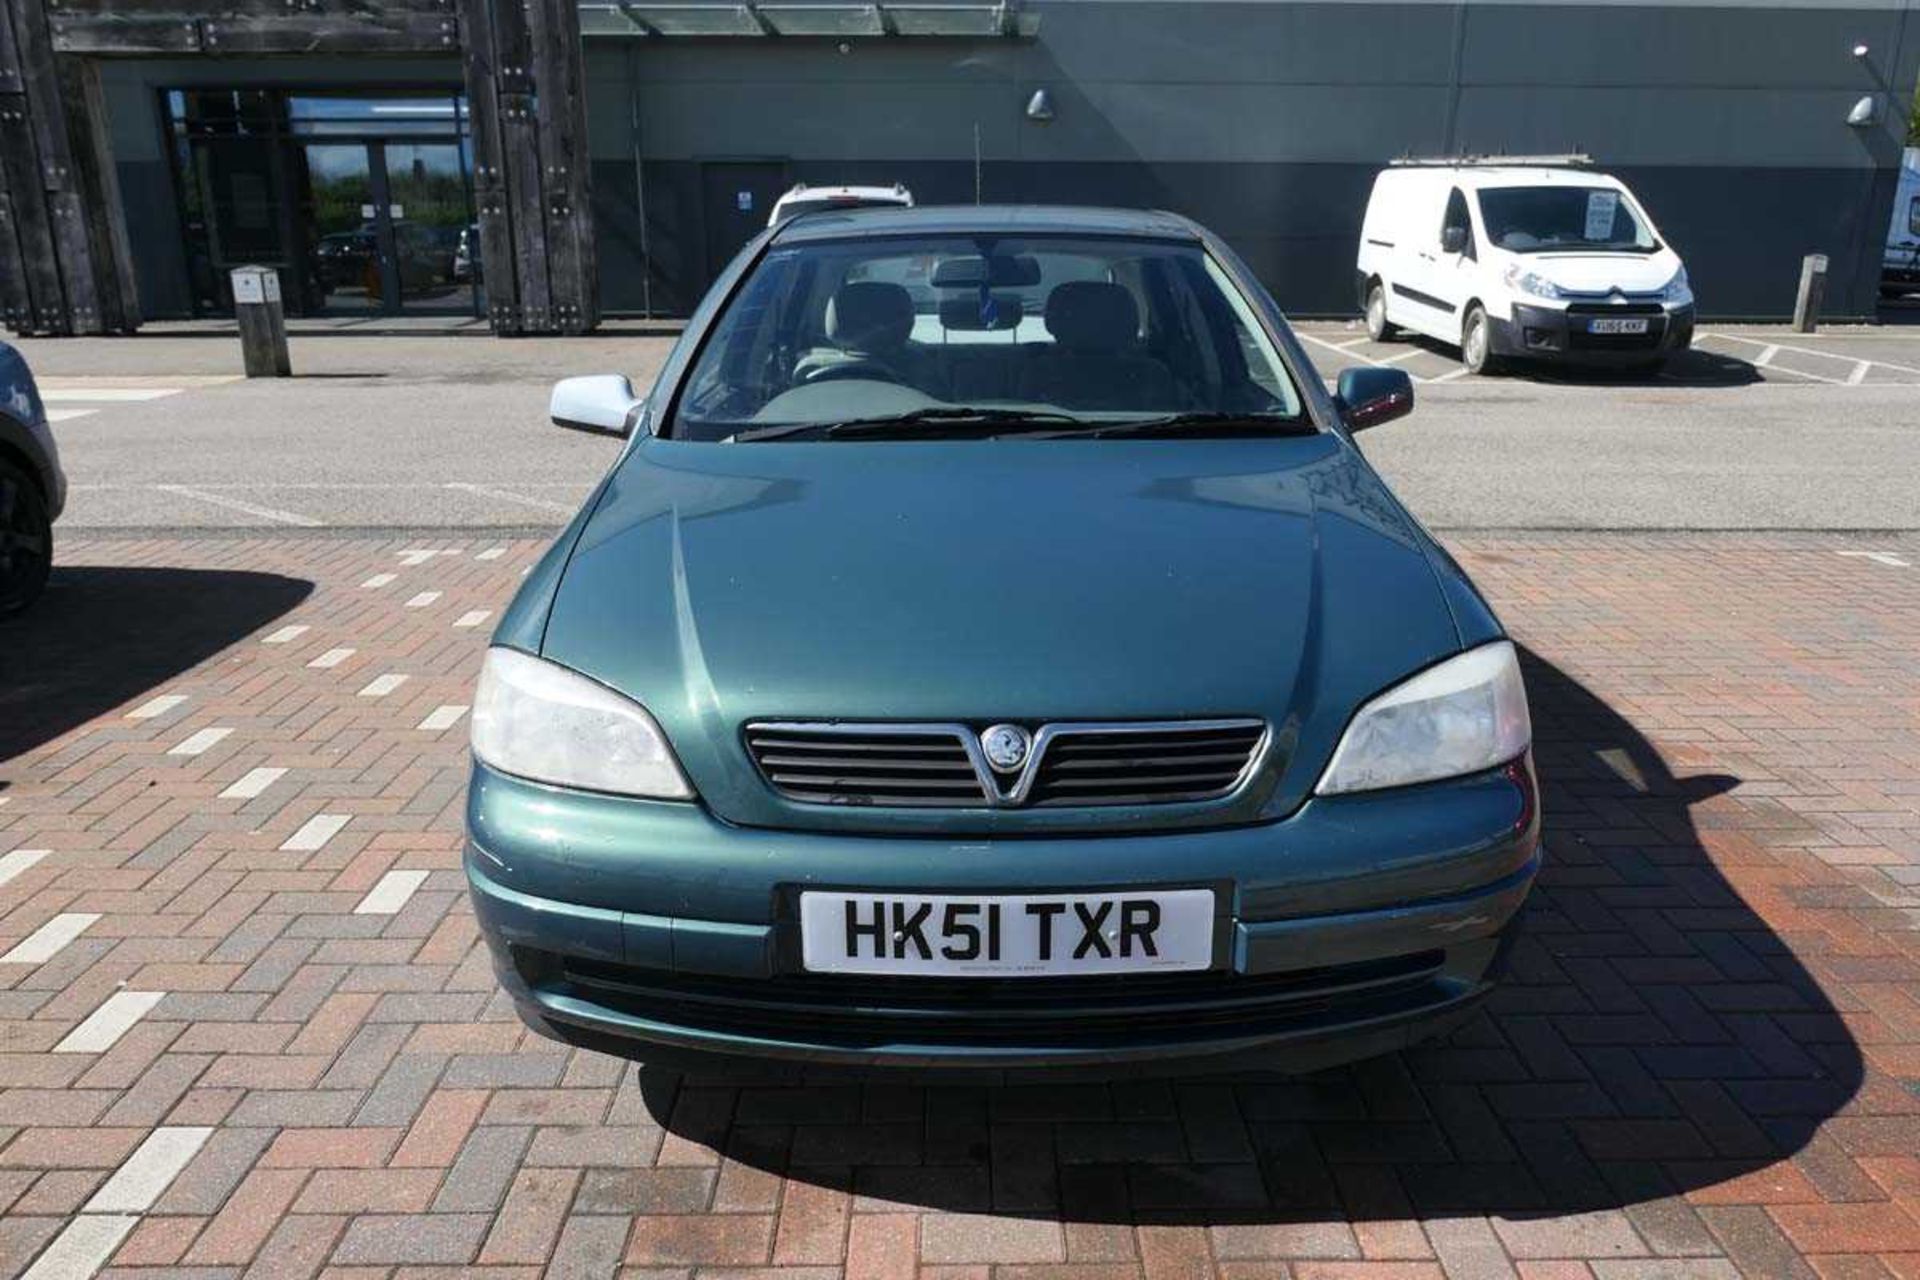 (HK51 TXR) Vauxhall Astra Club 8V, first registered 29.11.2001, 5 door hatchback in green, 1598cc - Image 3 of 11